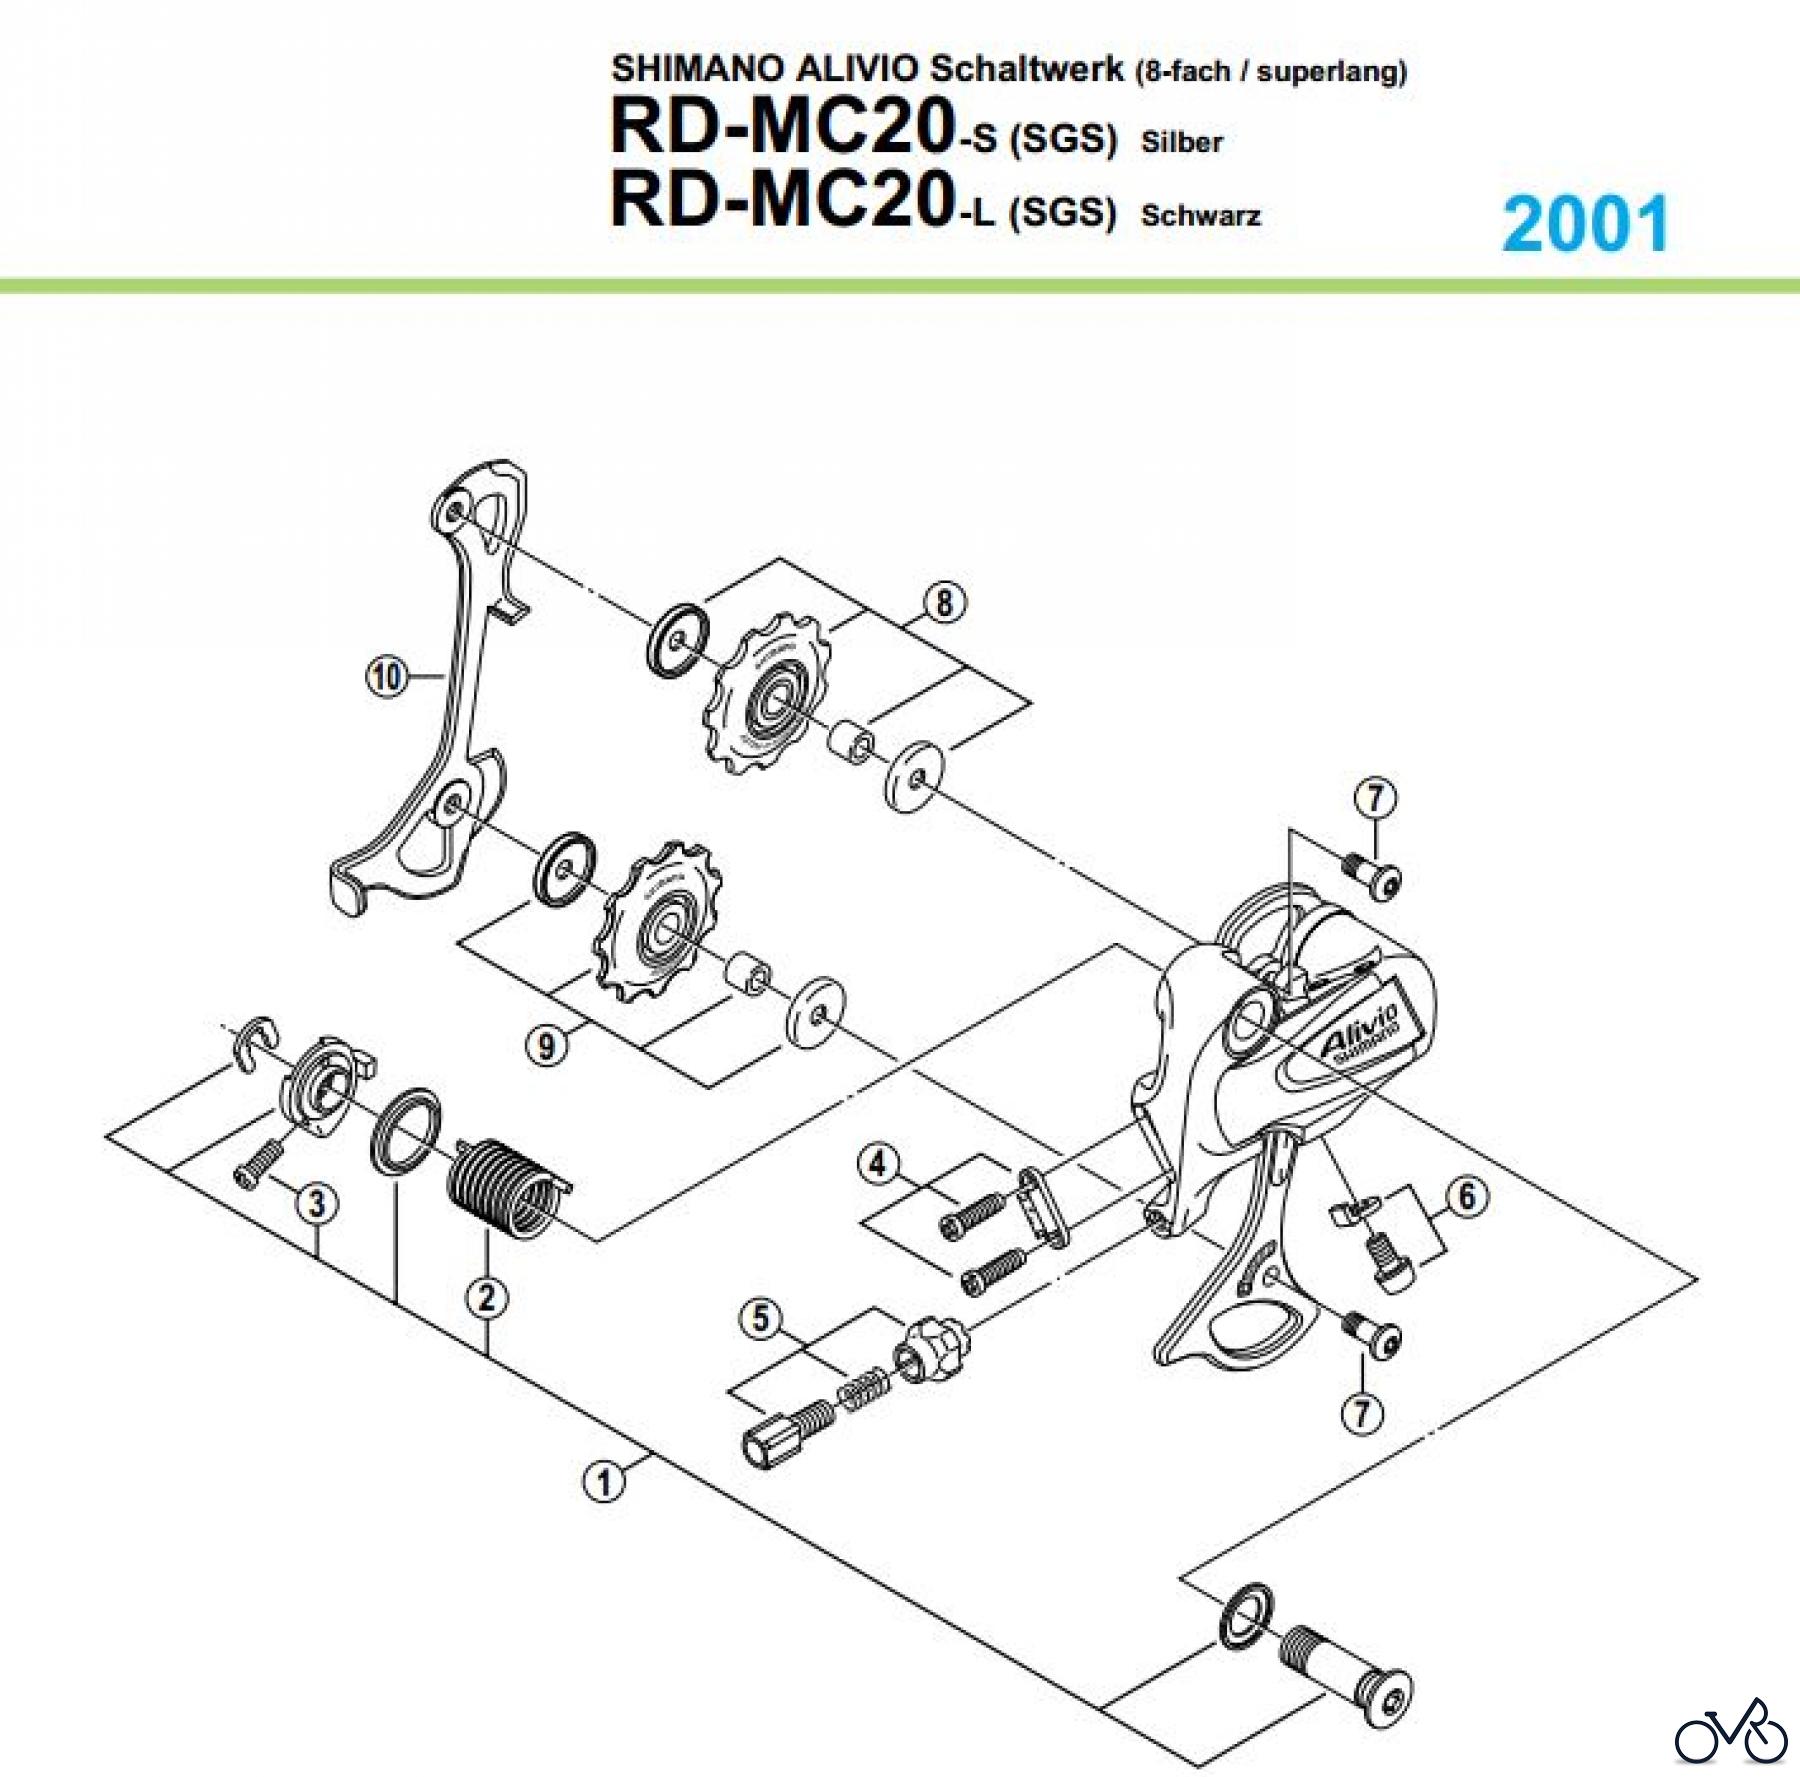  Shimano RD Rear Derailleur - Schaltwerk RD-MC20-01